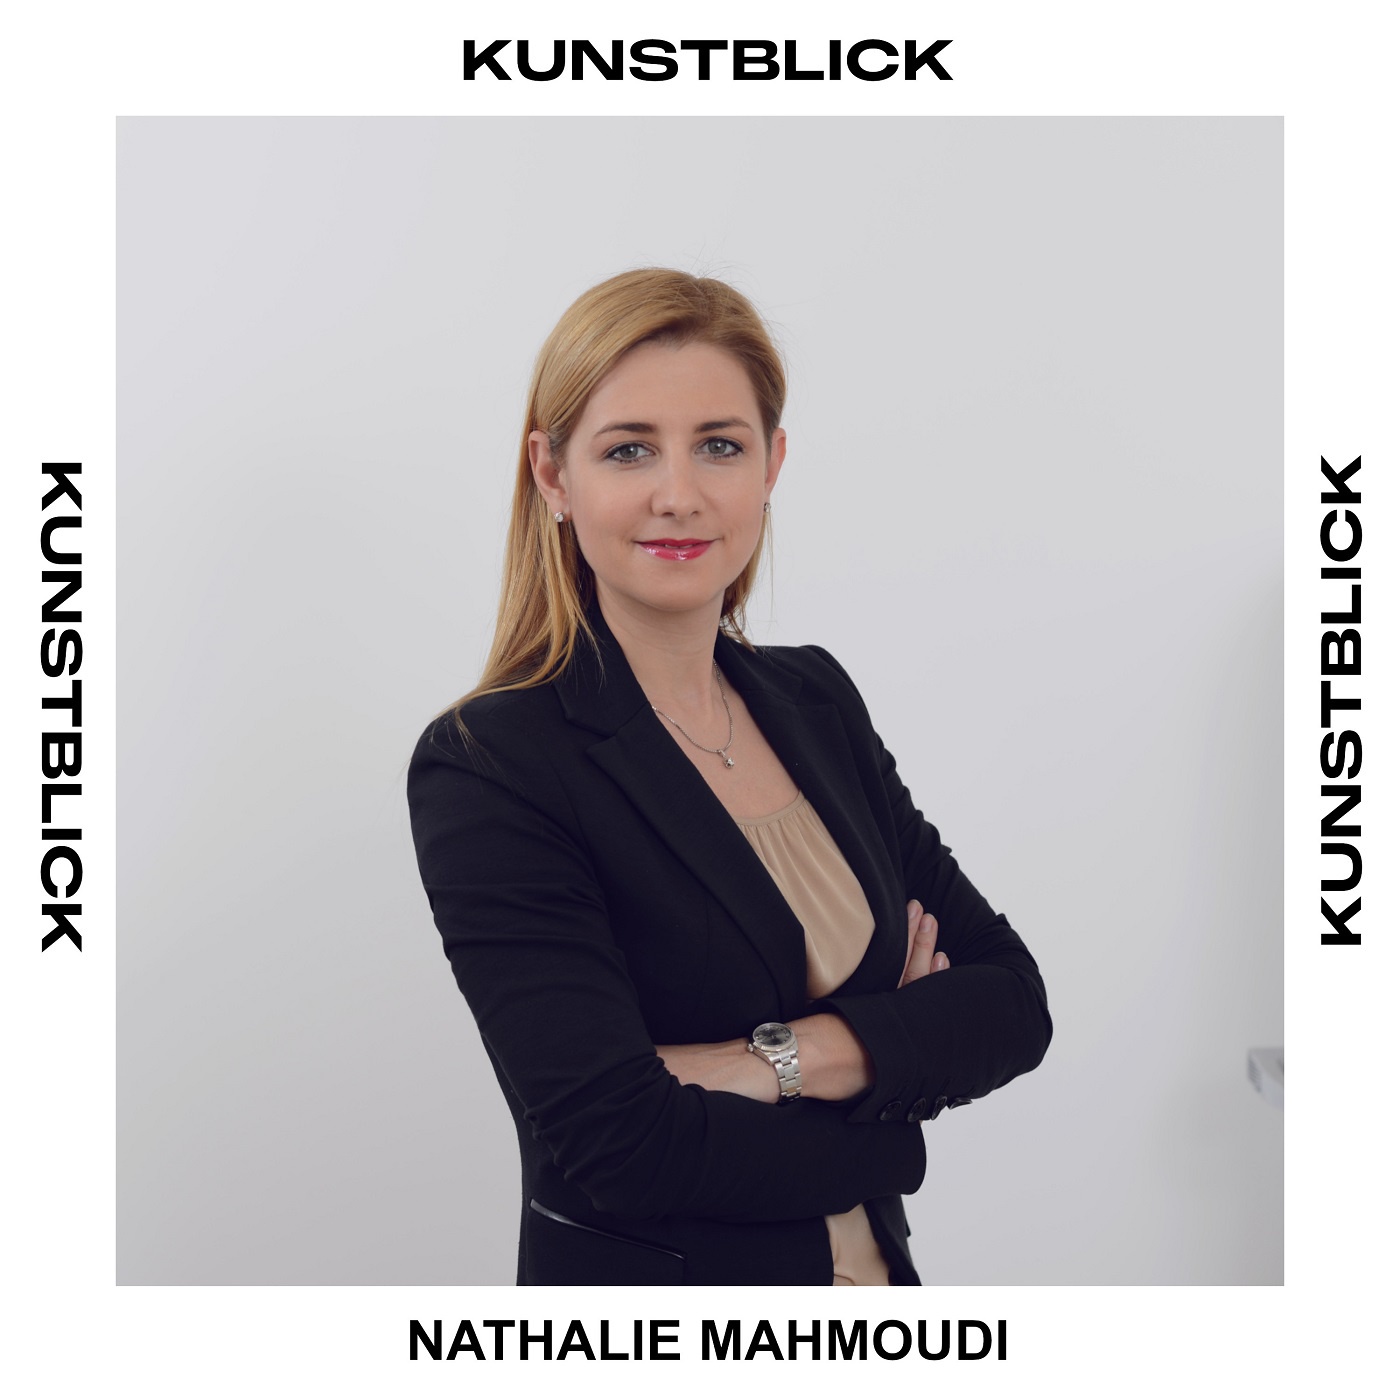 Nathalie Mahmoudi - Anwältin für Kunstrecht